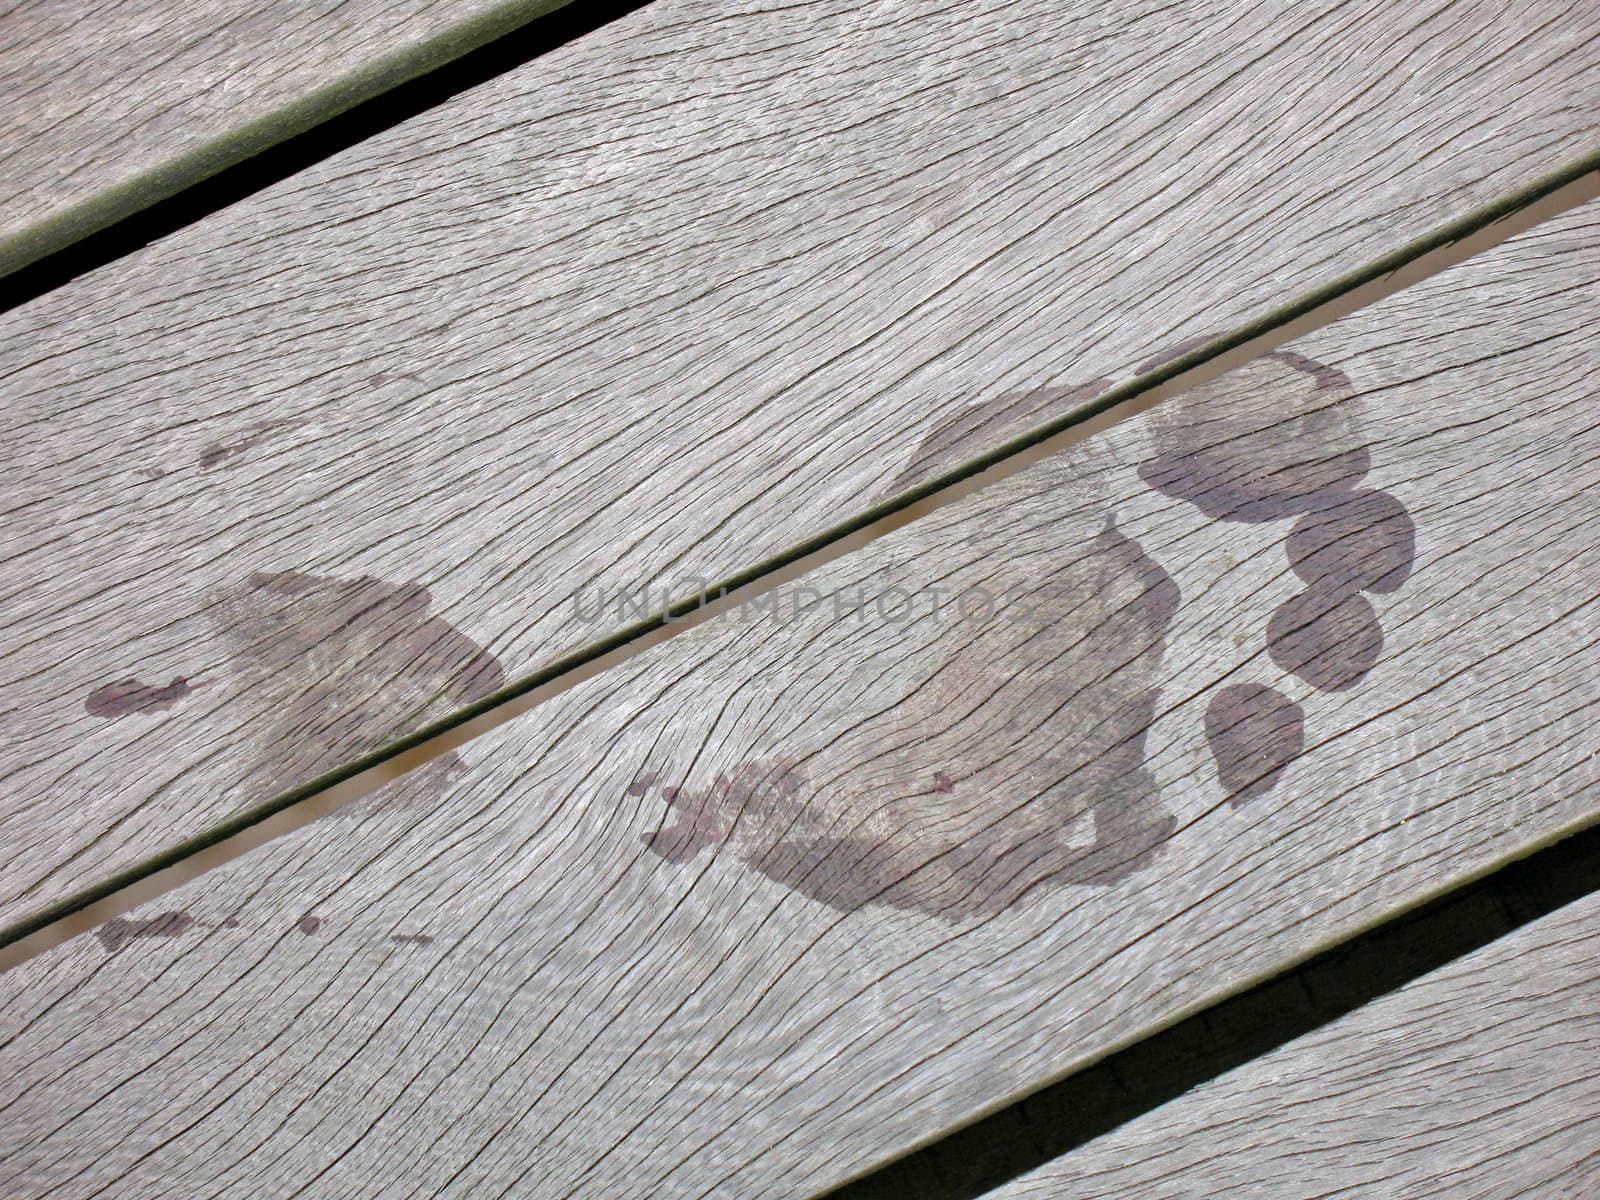 Wet Footprint on Wooden Boards of Pier by green308